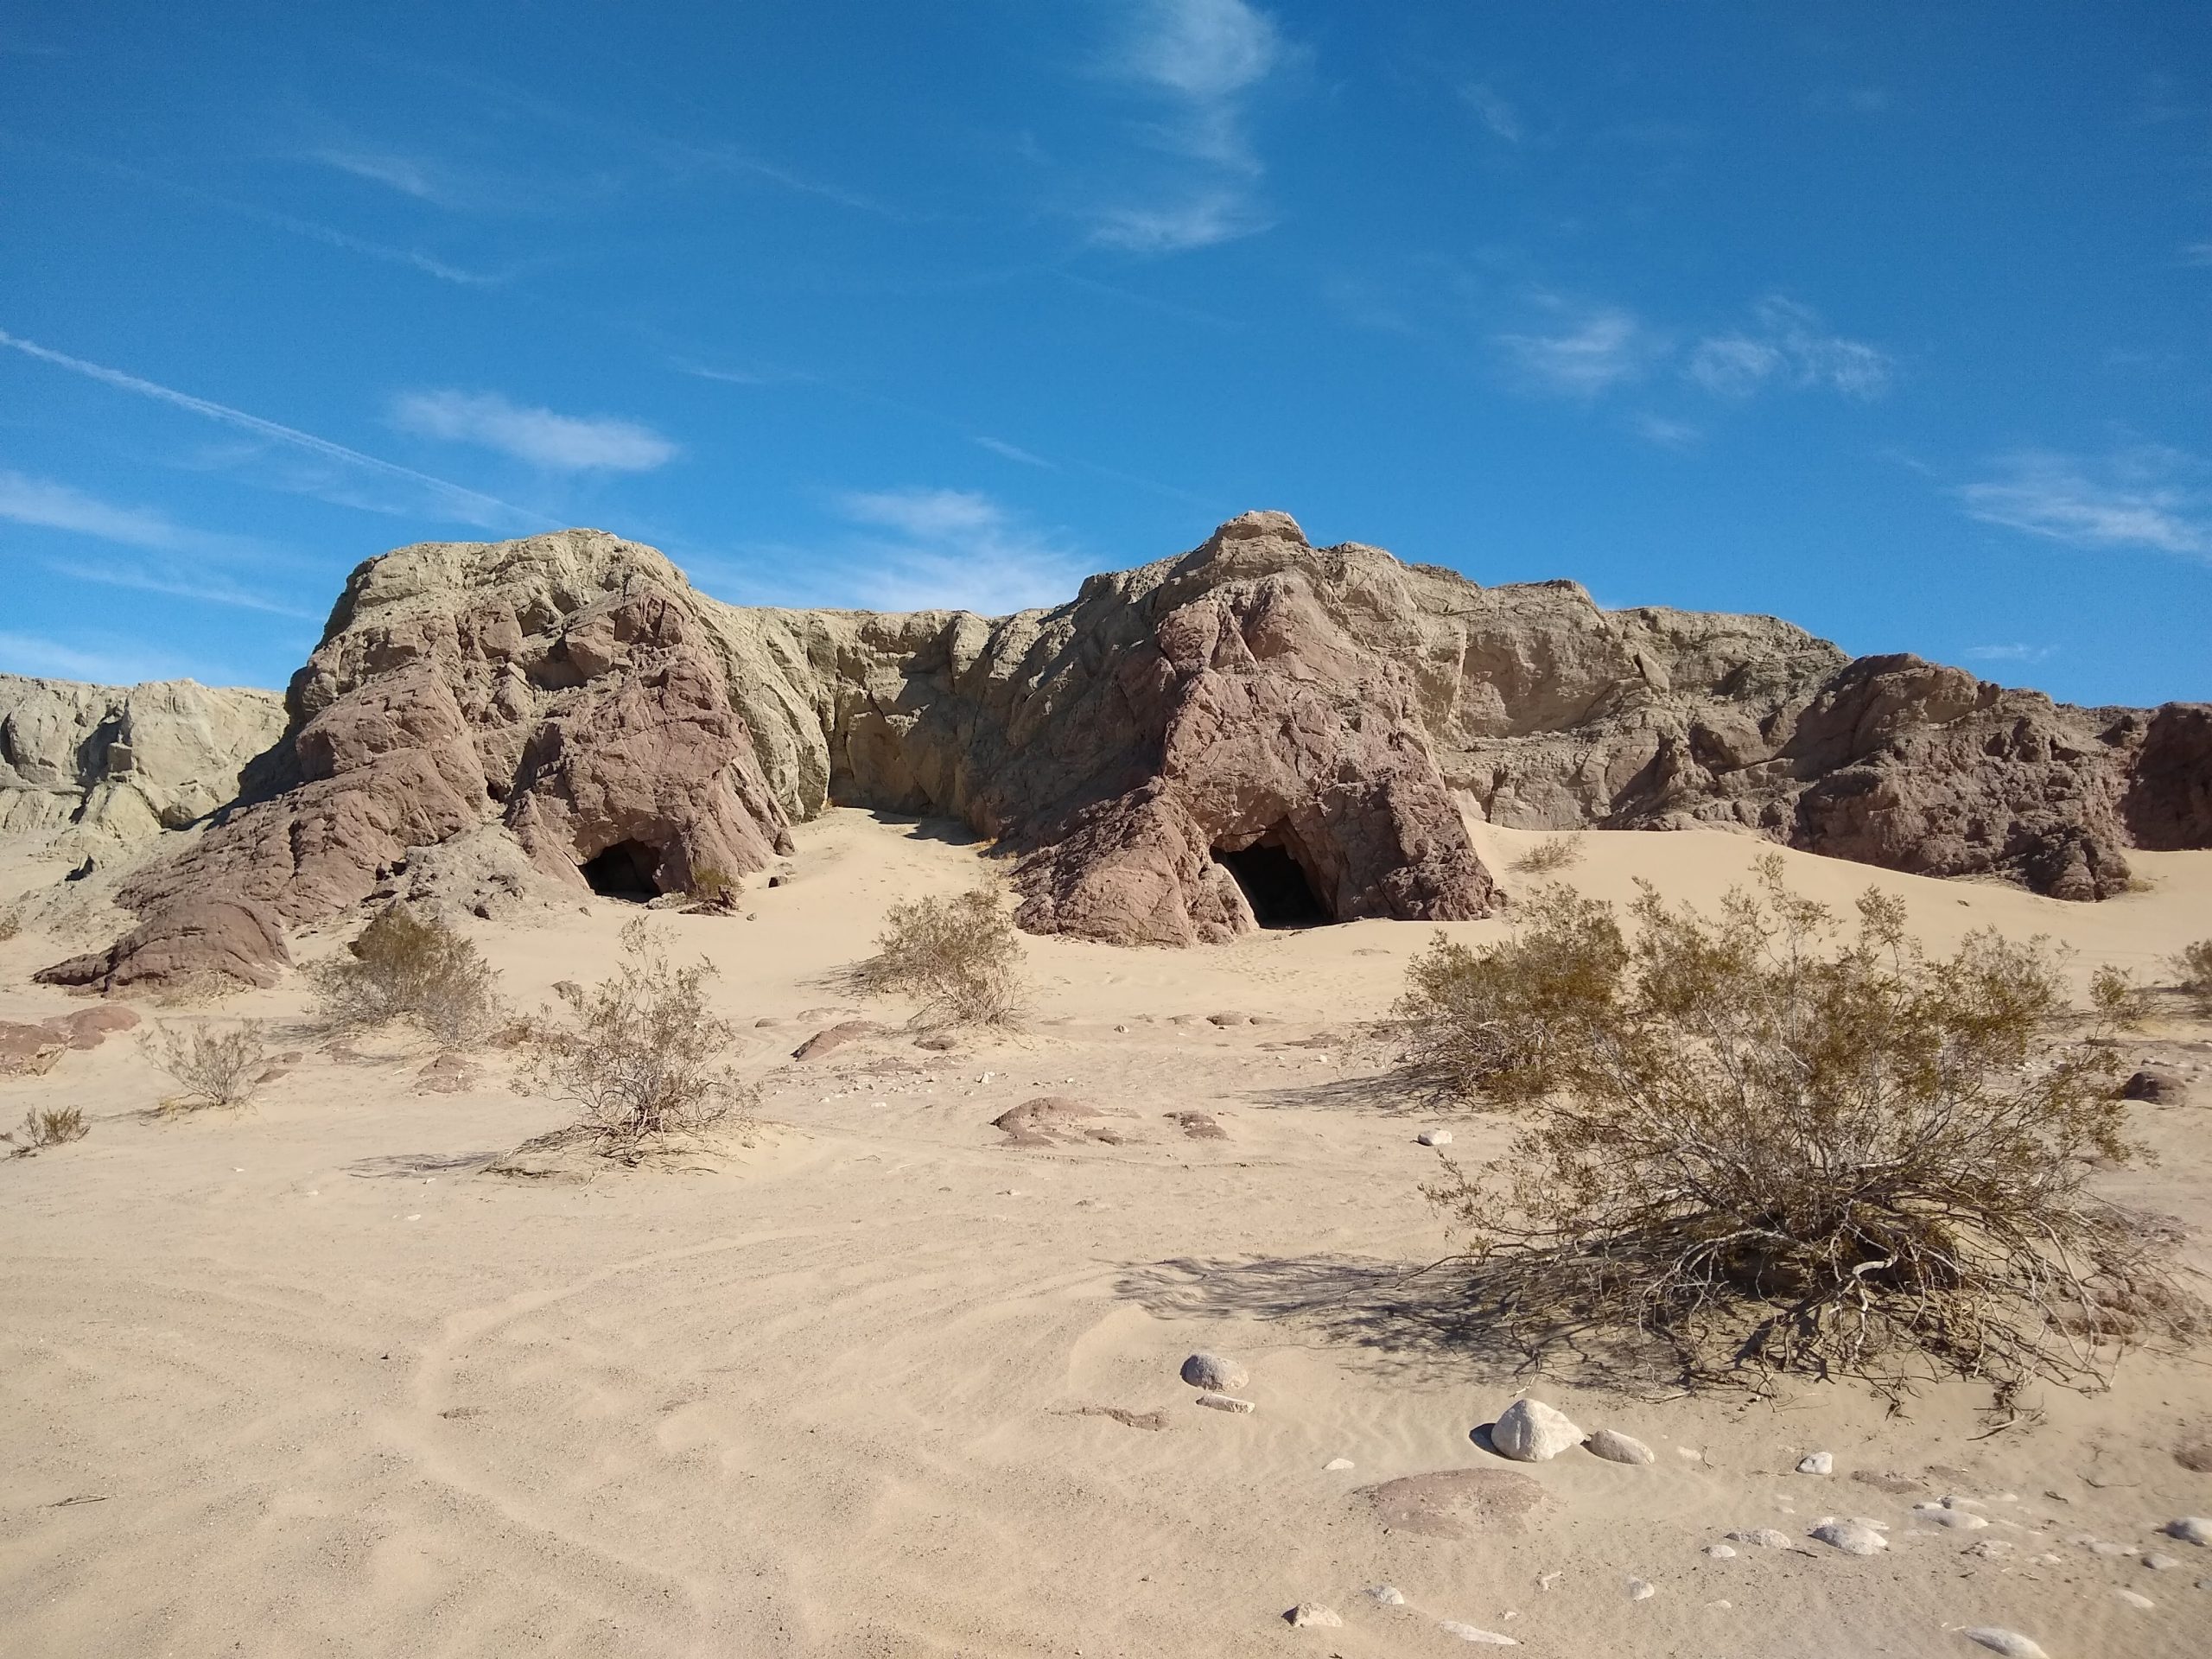 Caves somewhere in the desert